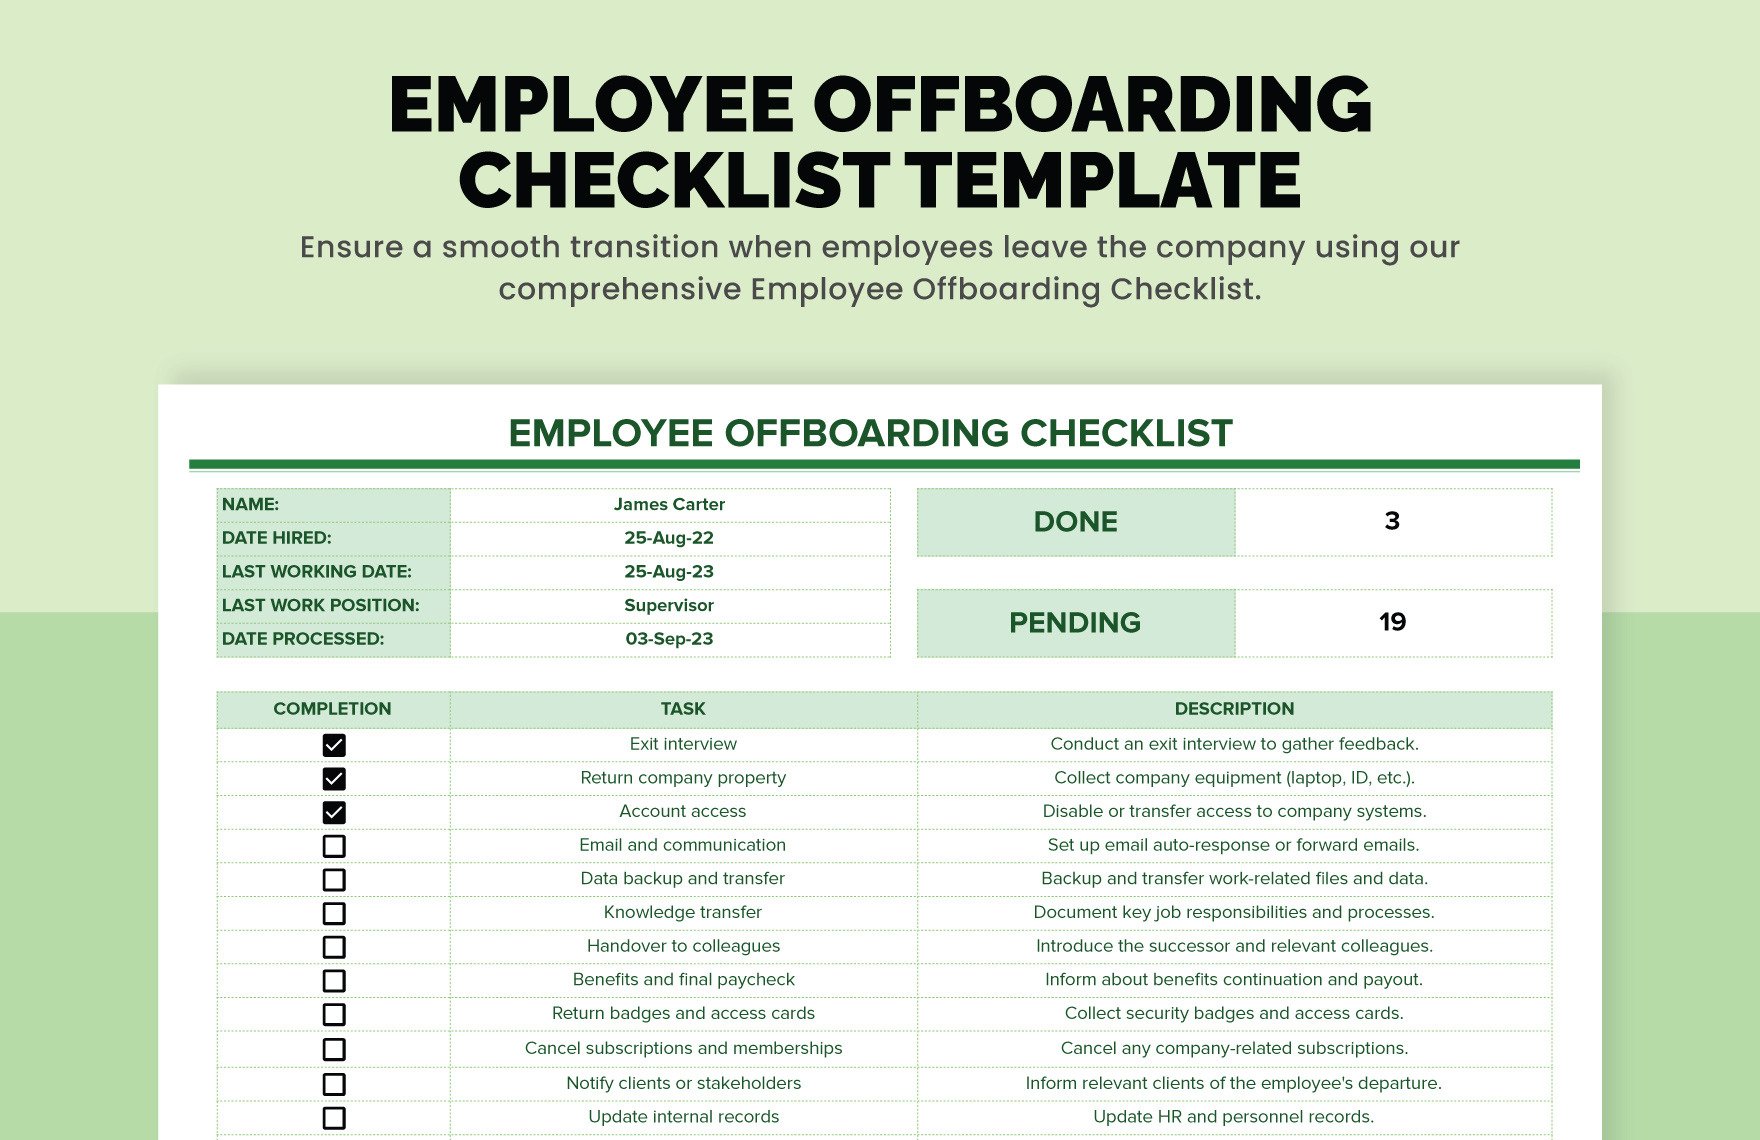 Employee Offboarding Checklist Template